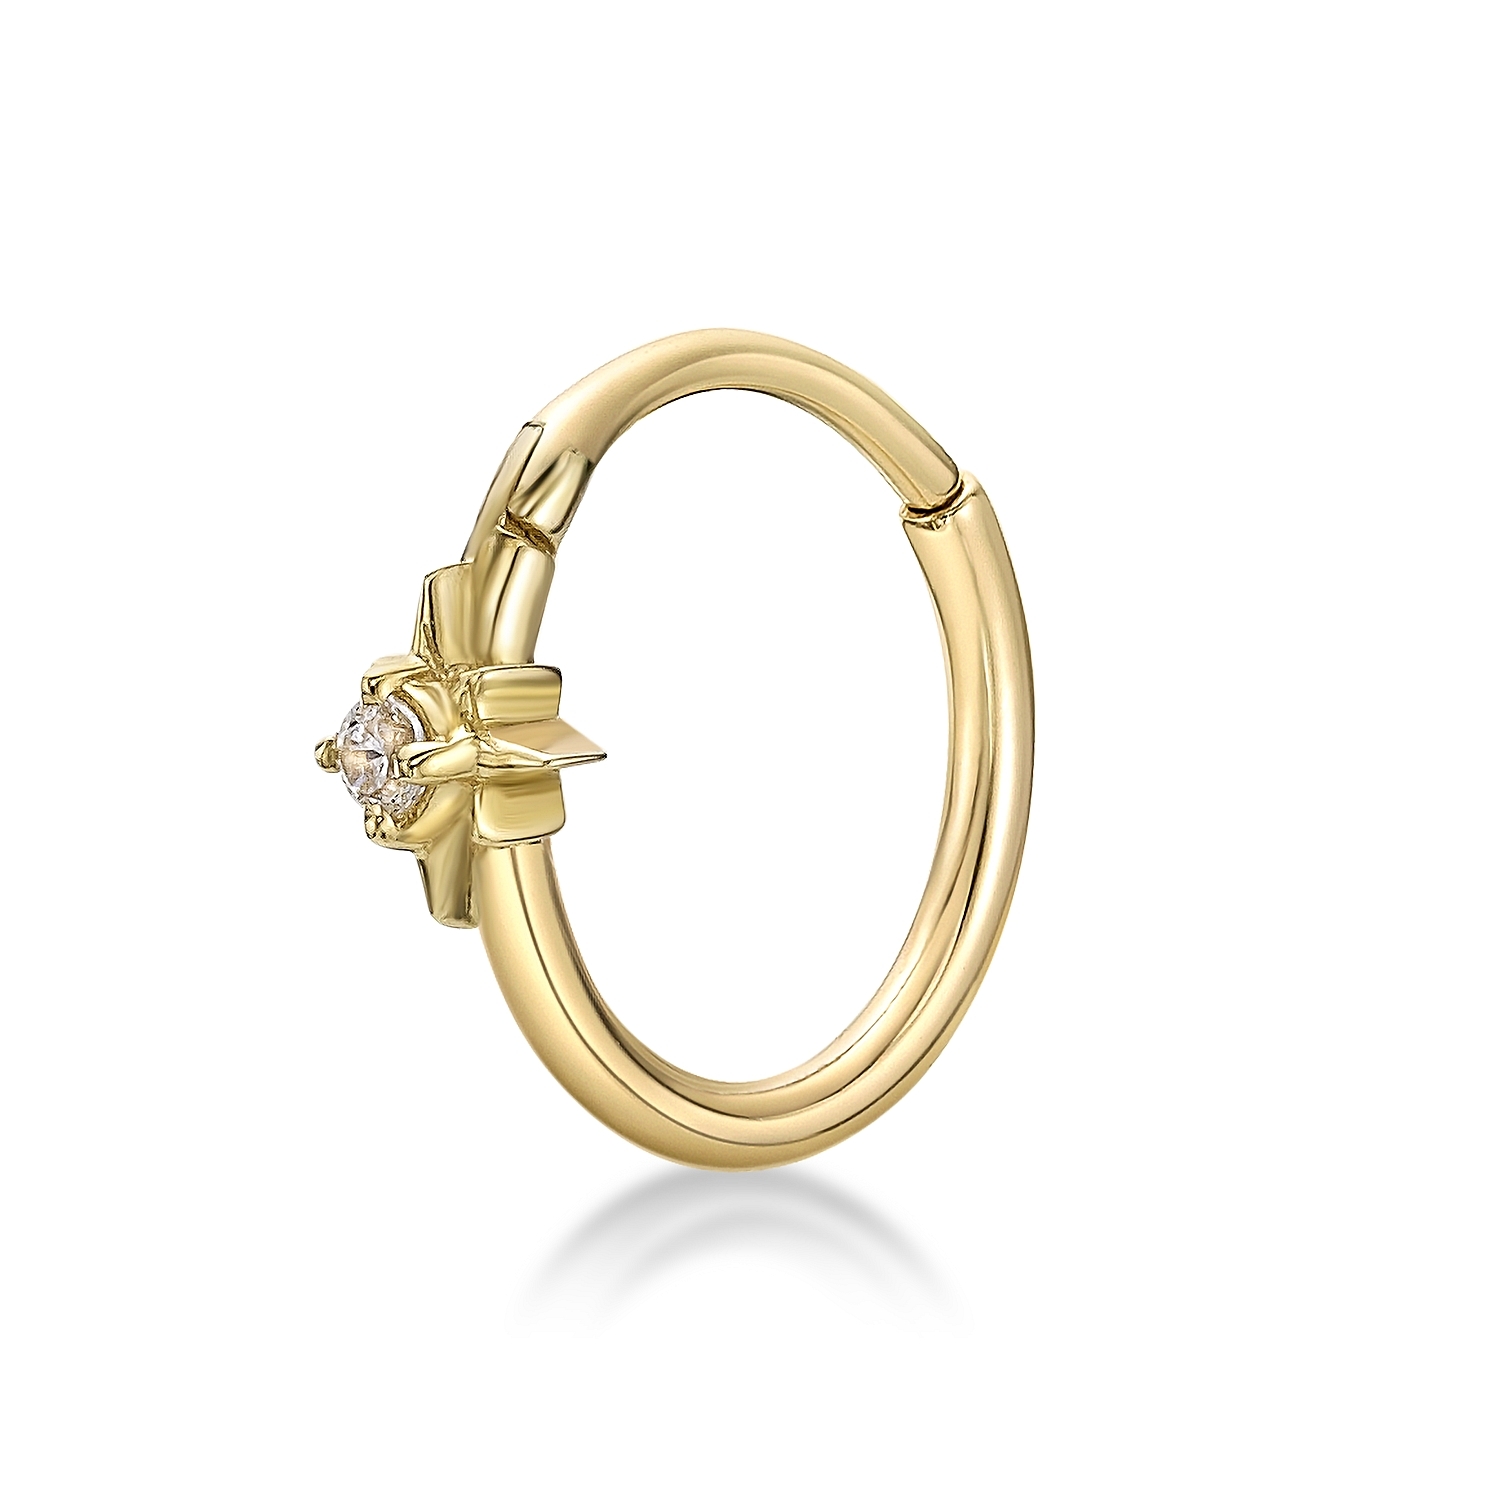 Lavari Jewelers Women's 10 MM Star Hoop Earring with Multi-Purpose Clicker, 14K Yellow Gold, 2 MM Cubic Zirconia, 20 Gauge